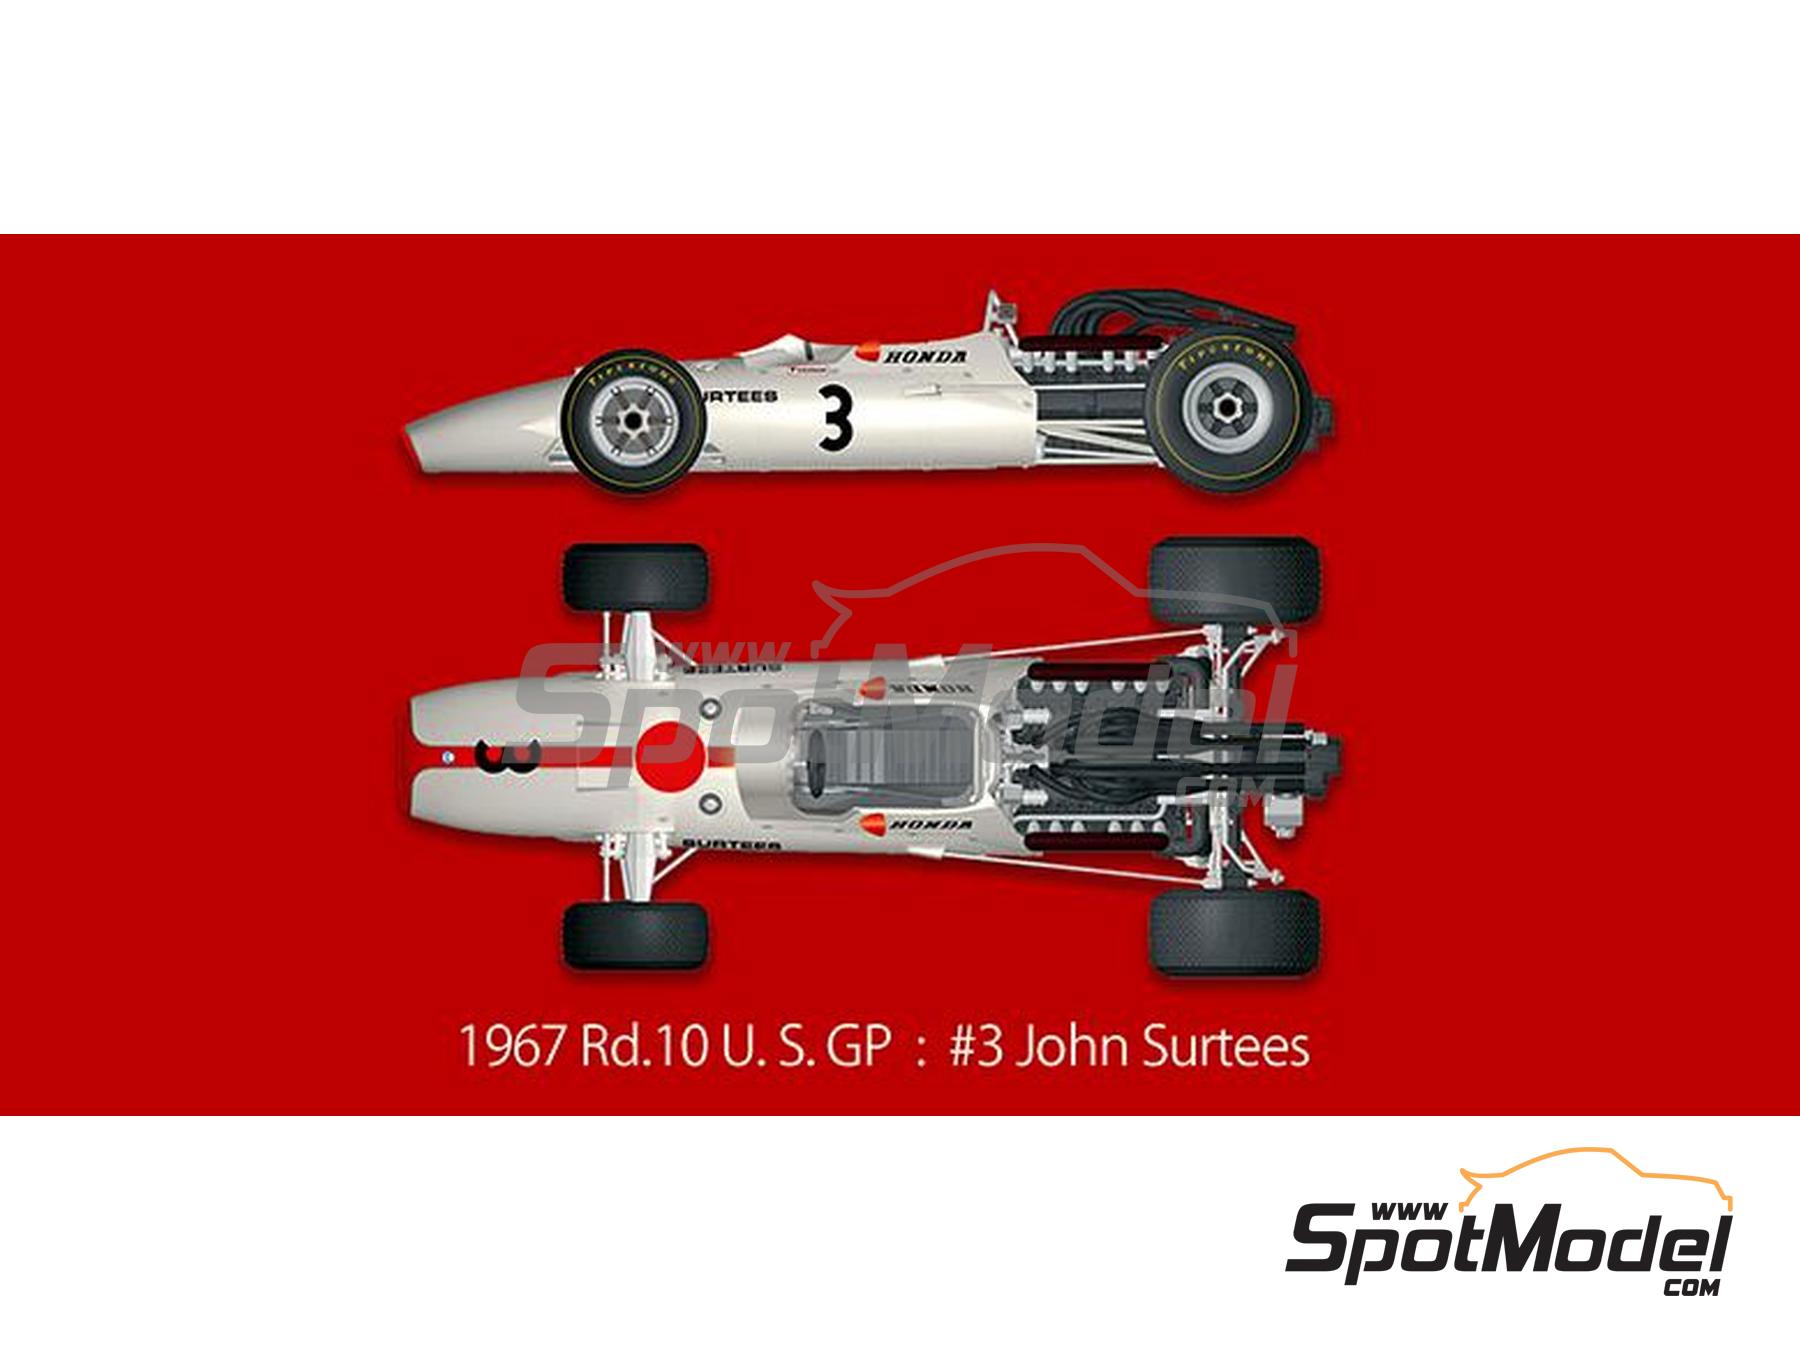 Honda RA300 Honda Racing Team - Italian Formula 1 Grand Prix, USA - United  States of America Formula 1 Grand Prix 1967. Car scale model kit in 1/12 sc